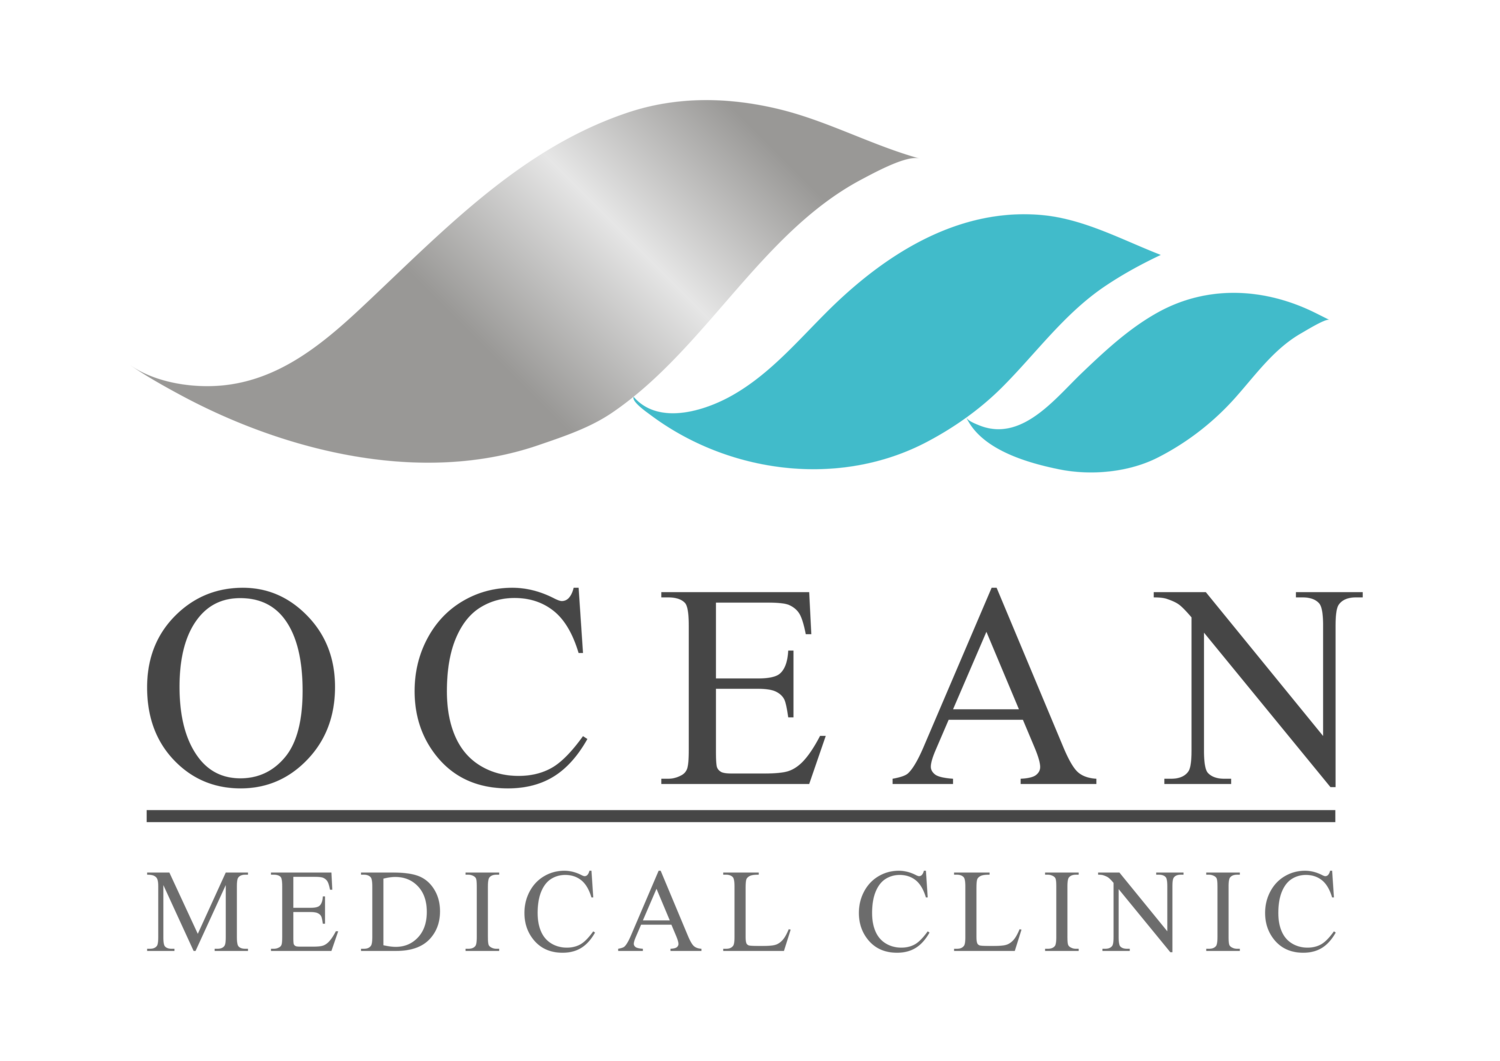 oceania healthcare ipo